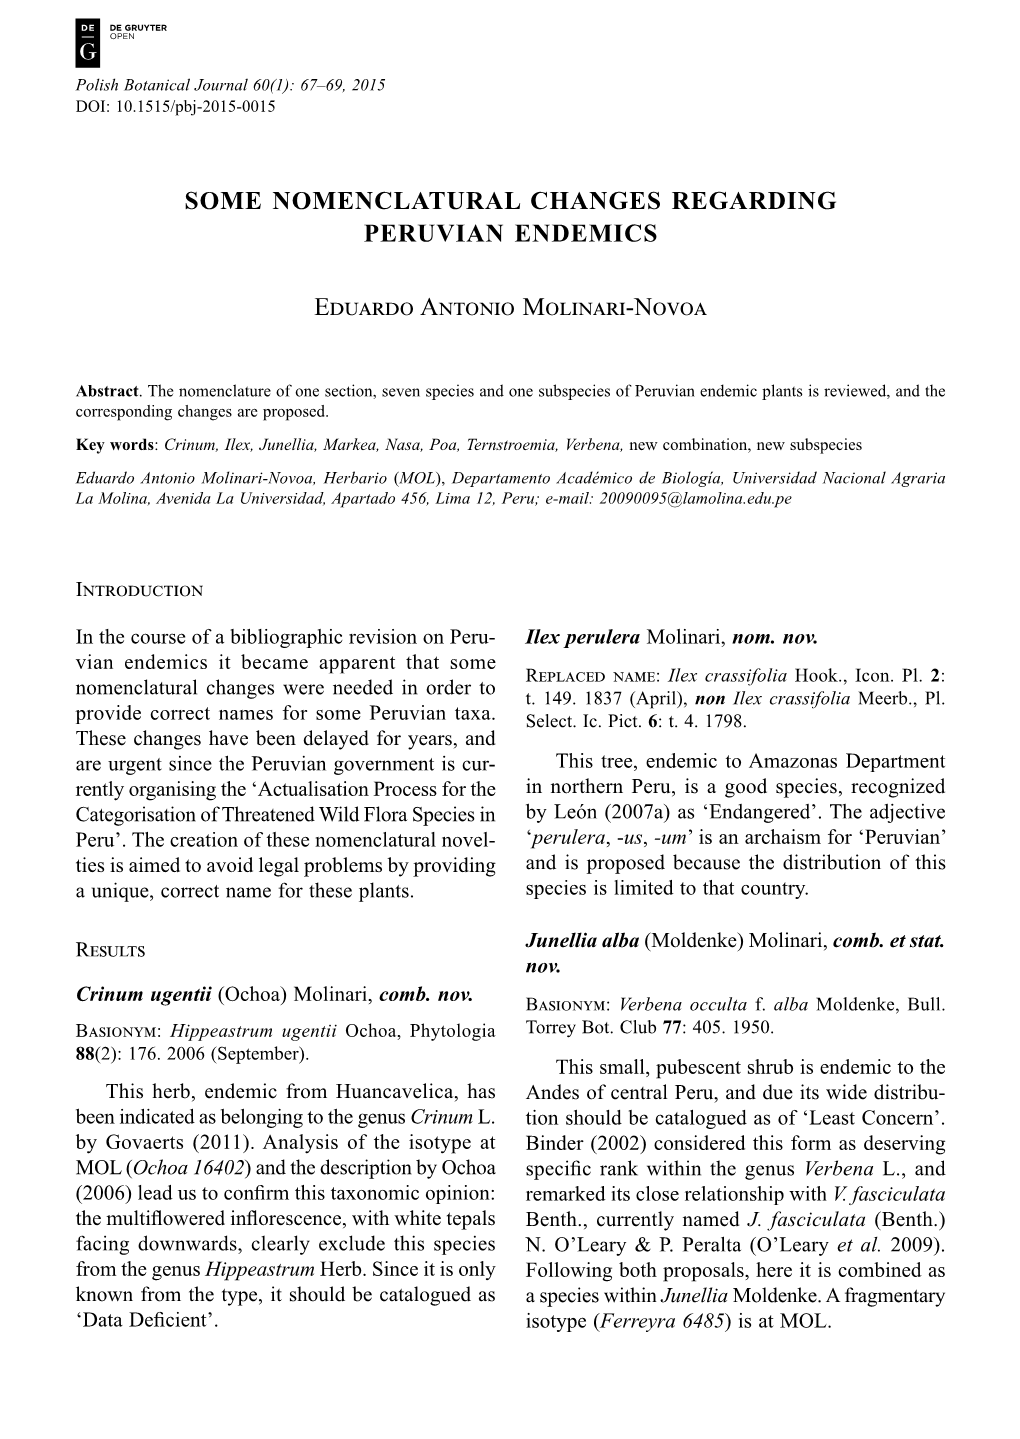 Some Nomenclatural Changes Regarding Peruvian Endemics